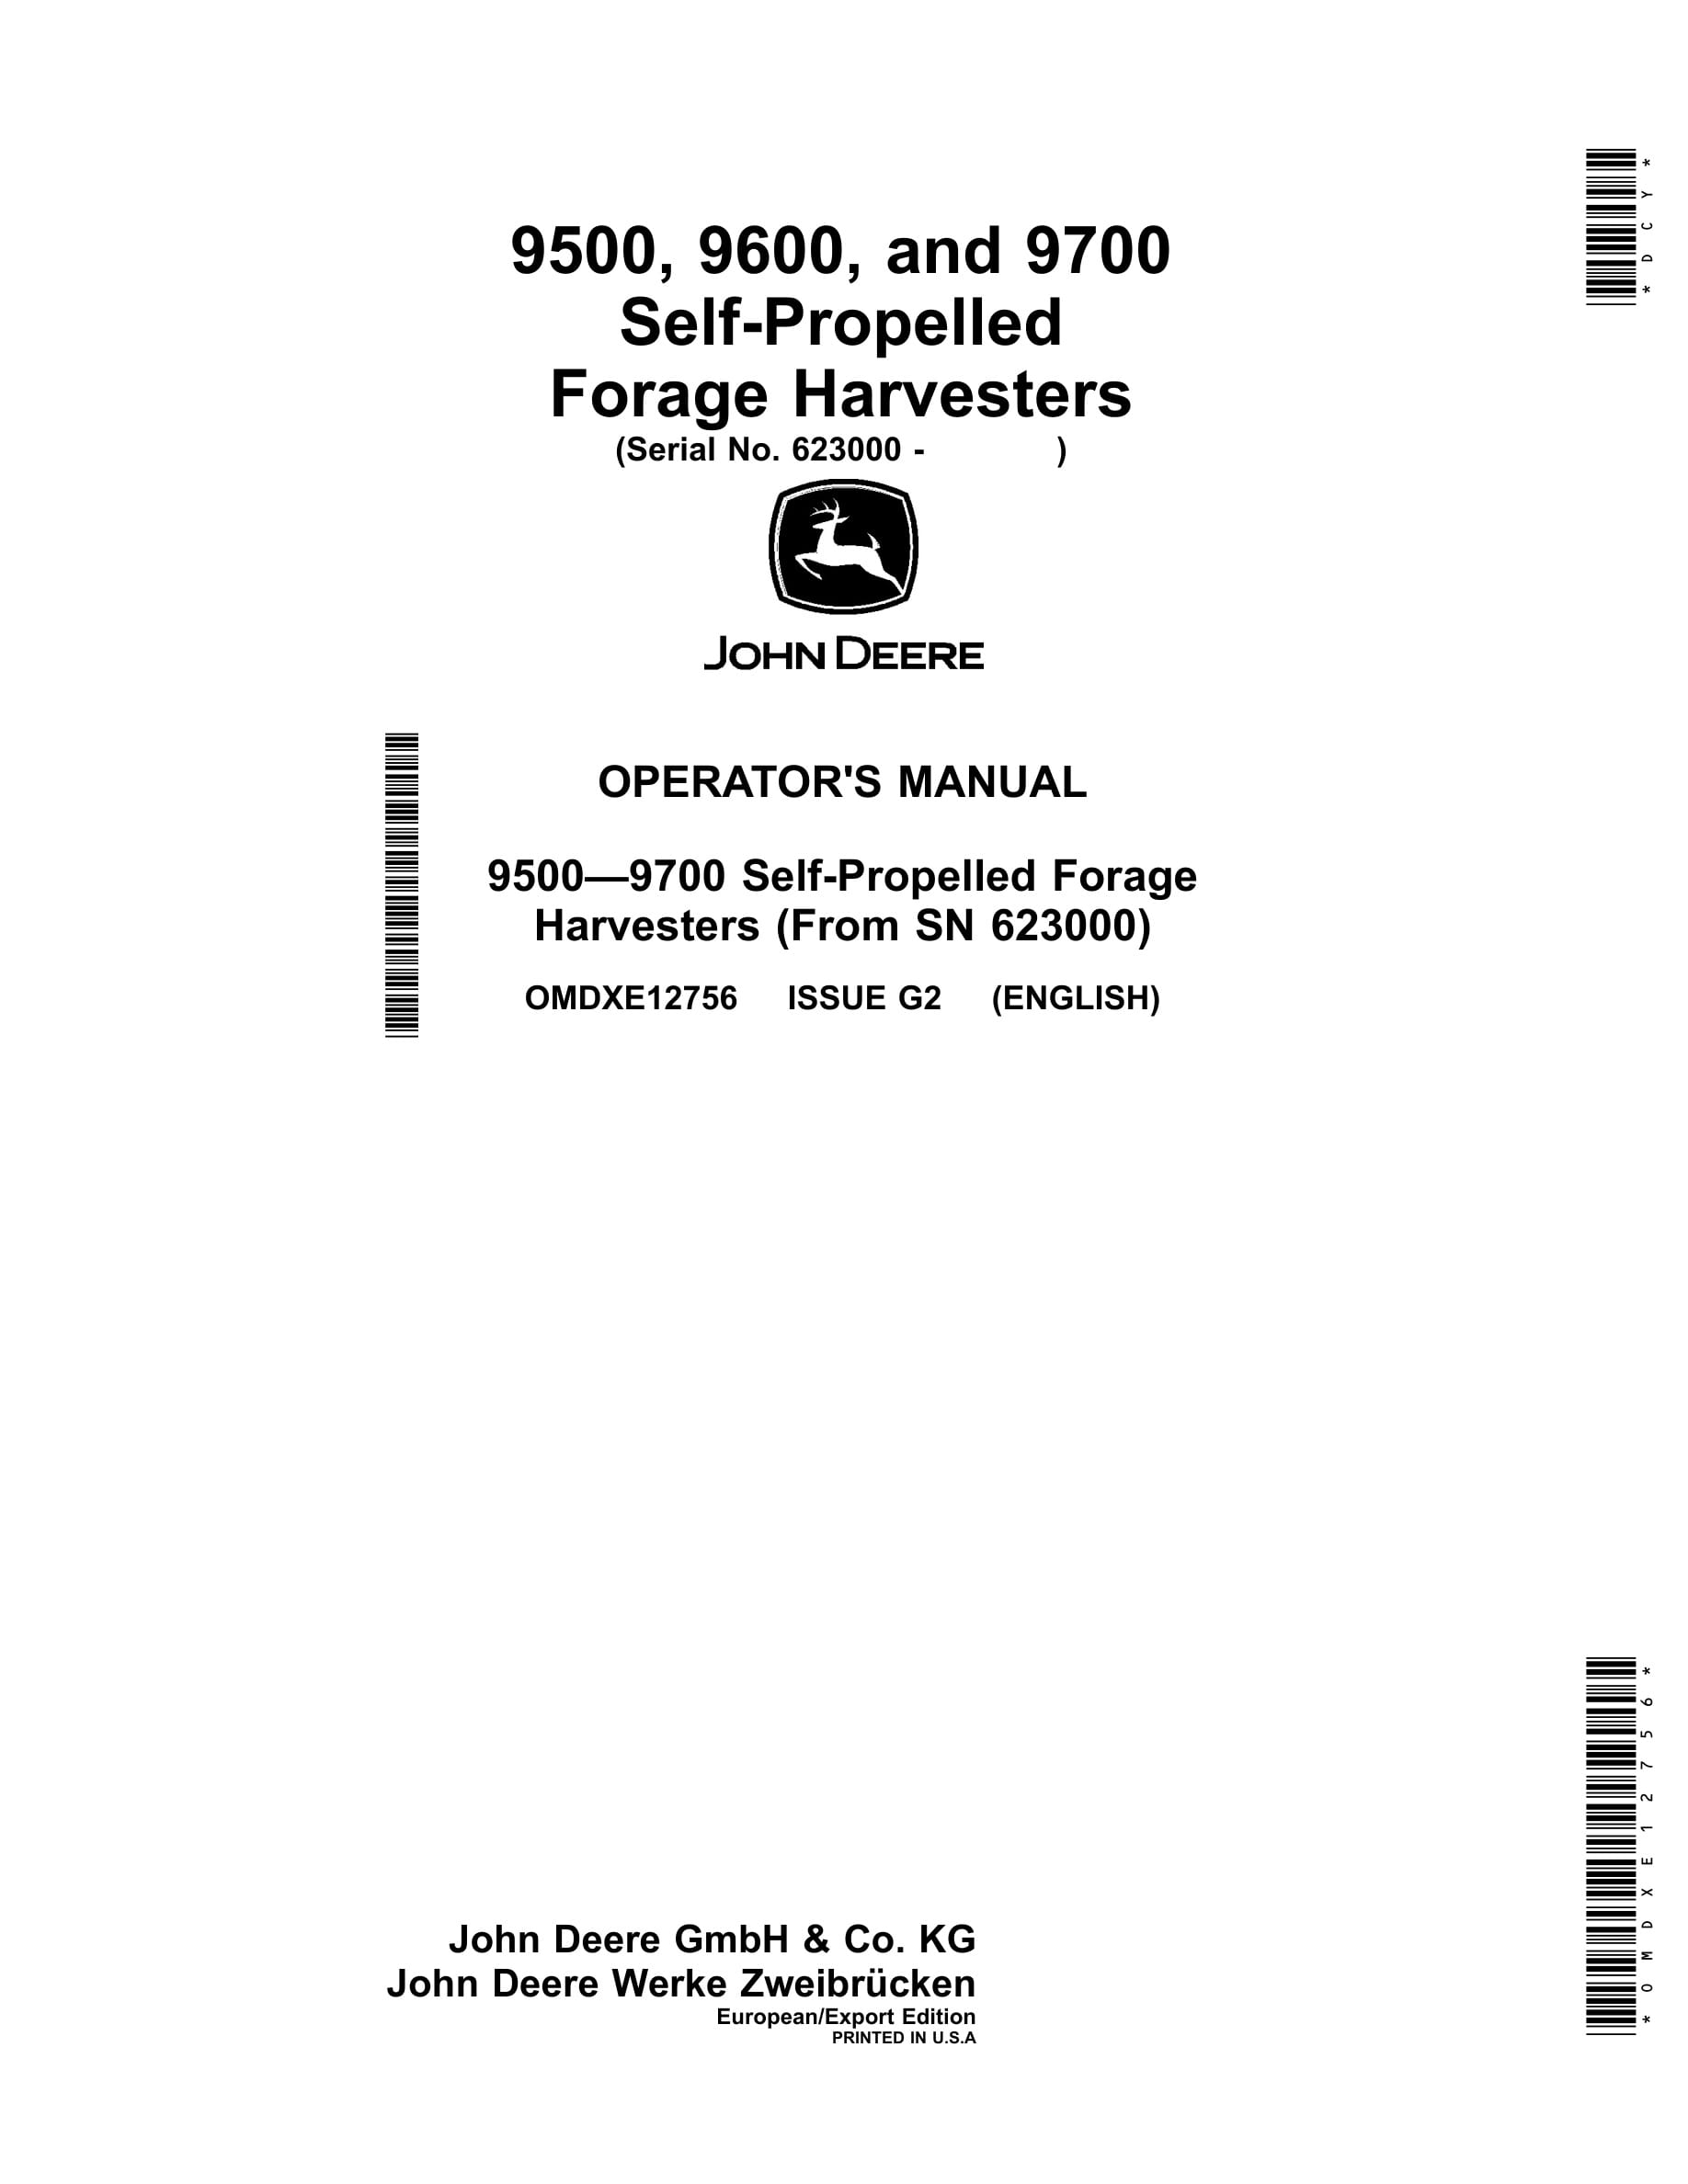 John Deere 9500, 9600, and 9700 Self-Propelled Forage Harvester Operator Manual OMDXE12756-1